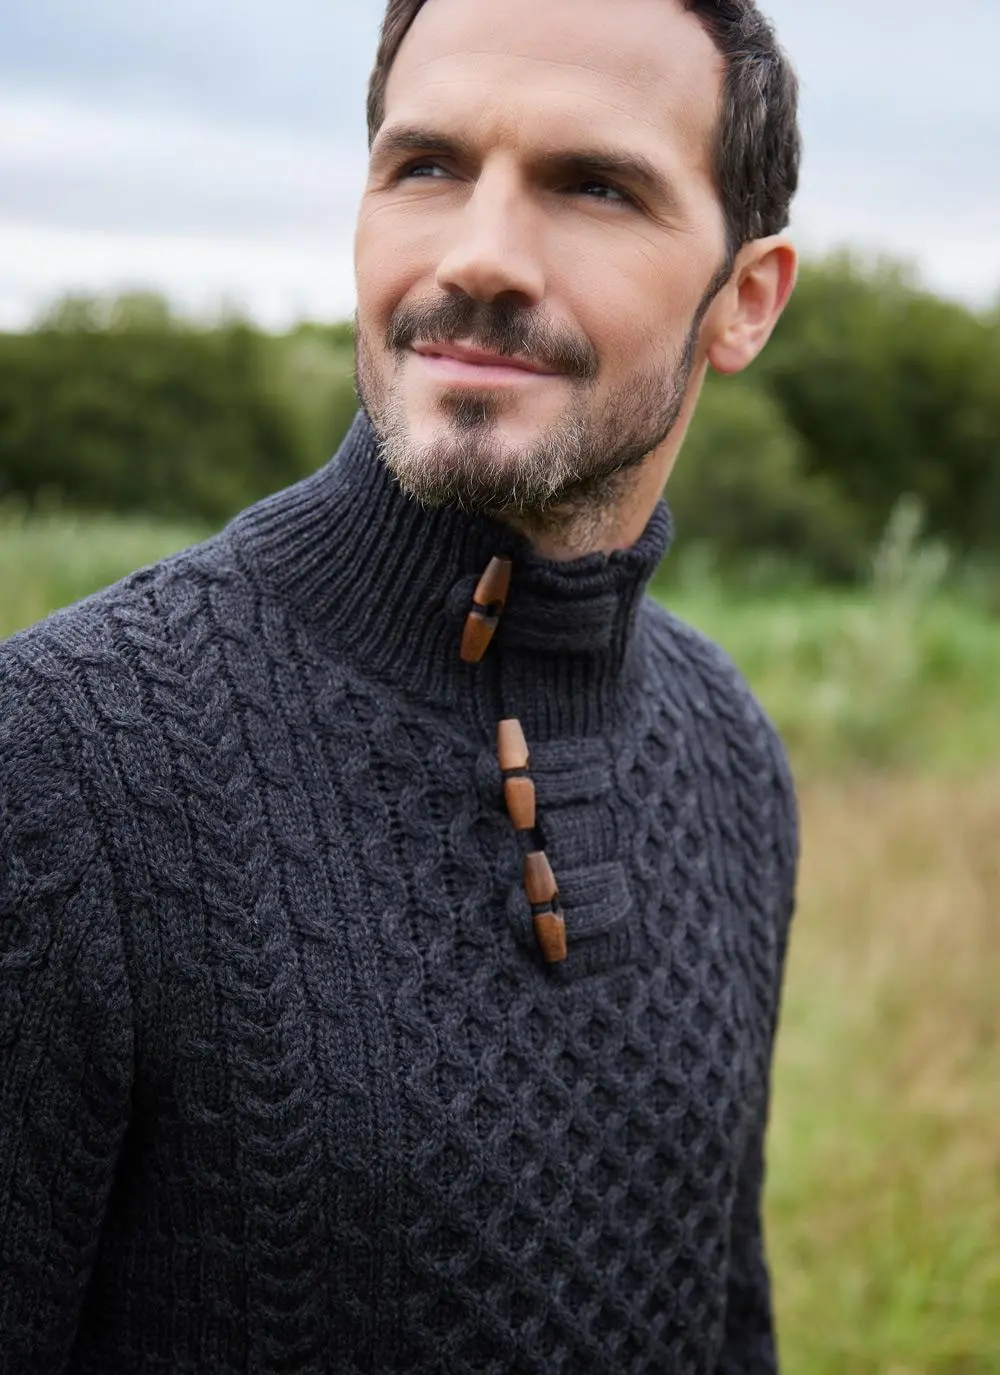 Cormac Toggle Neck Aran Sweater in Charcoal | Blarney